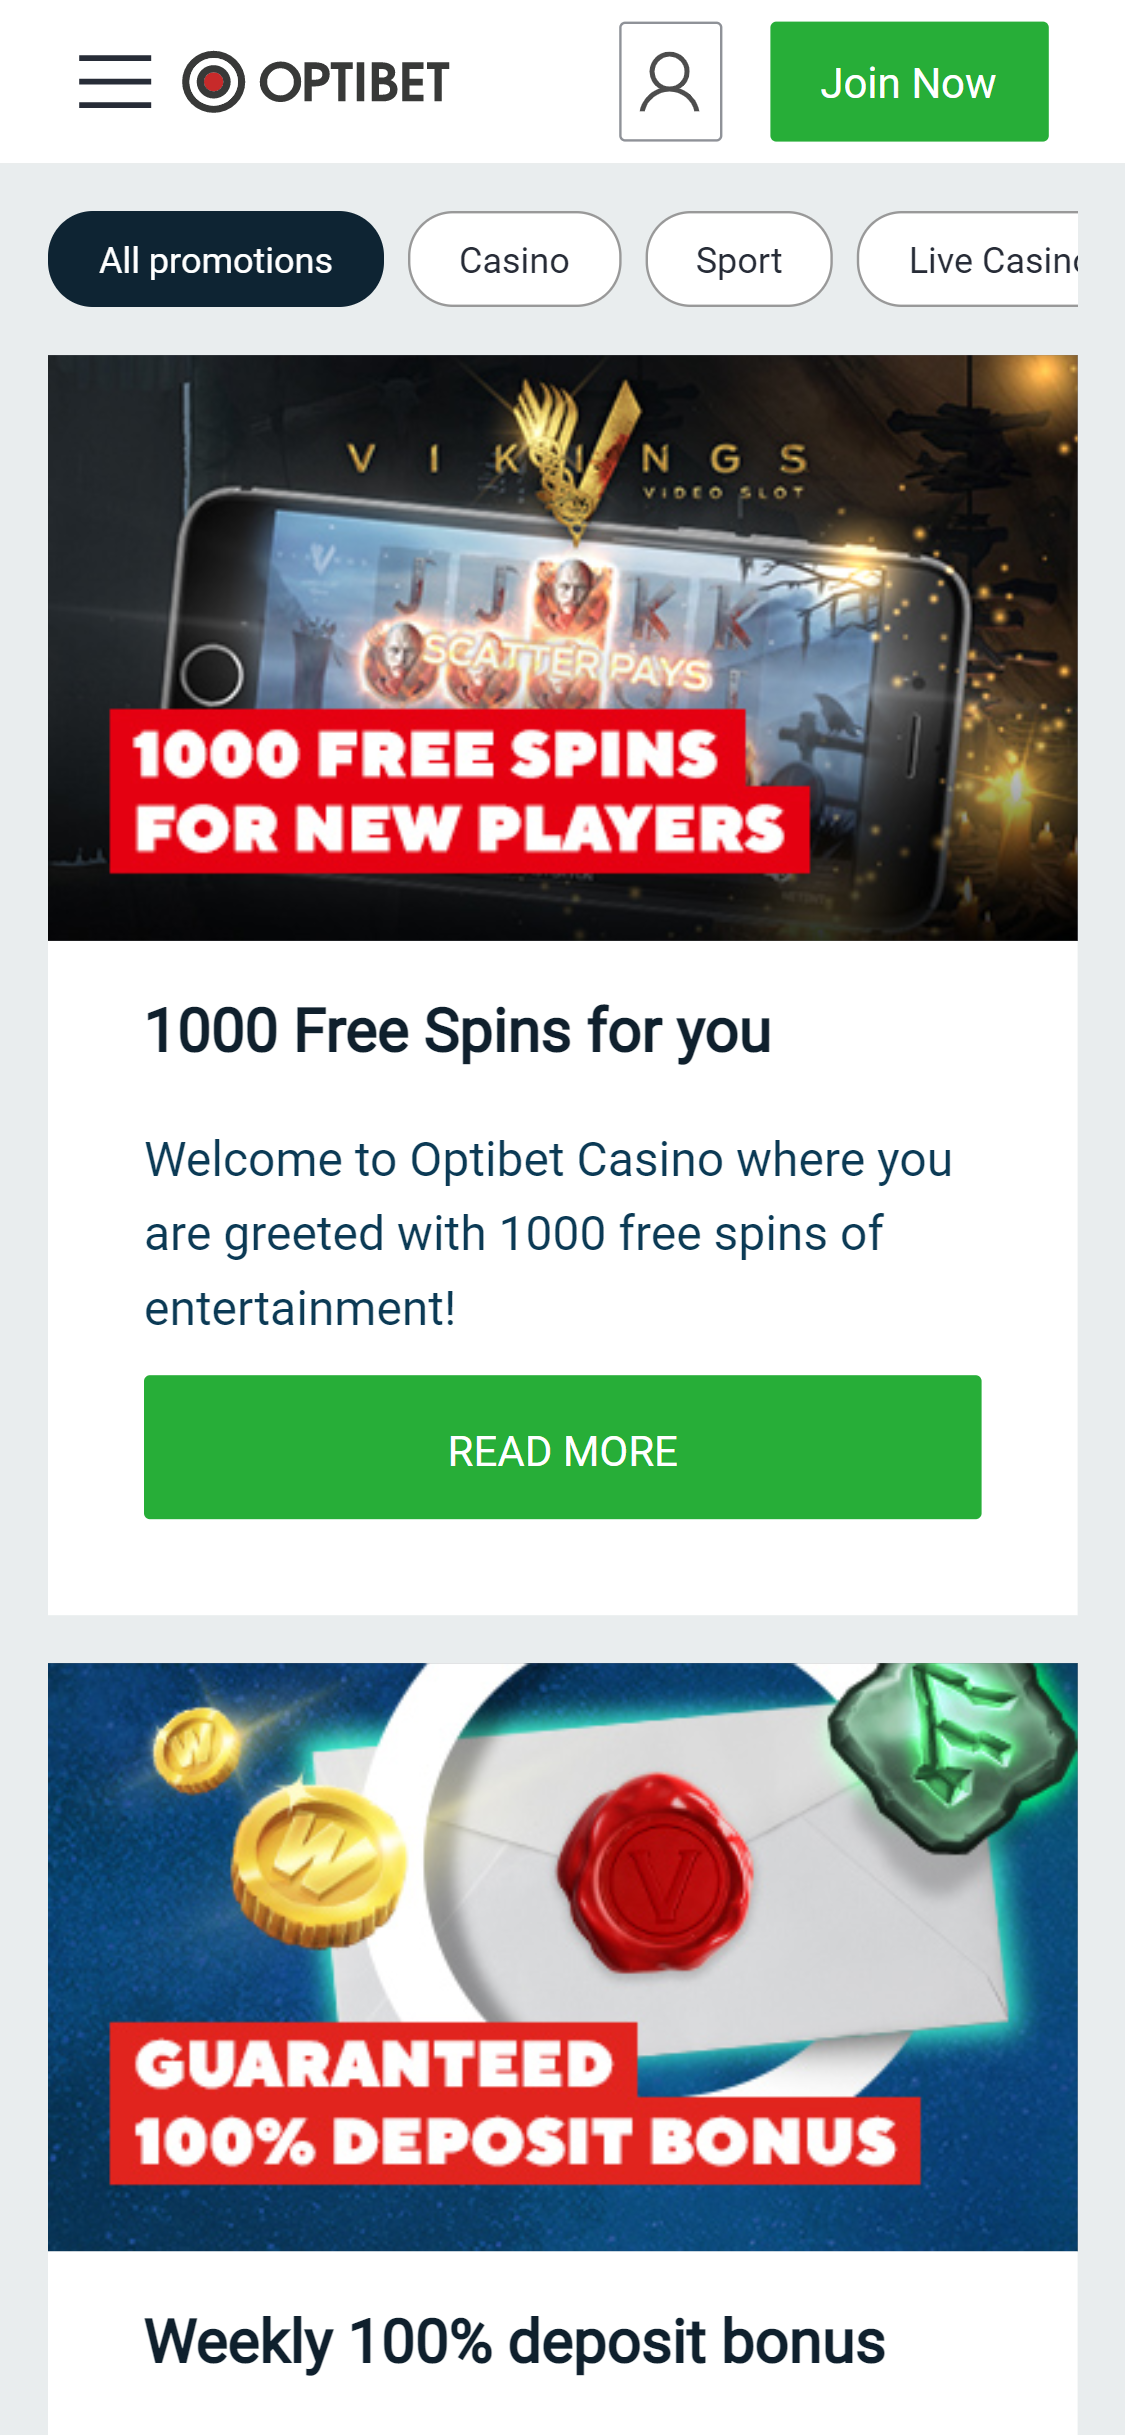 OptiBet Casino Mobile No Deposit Bonus Review